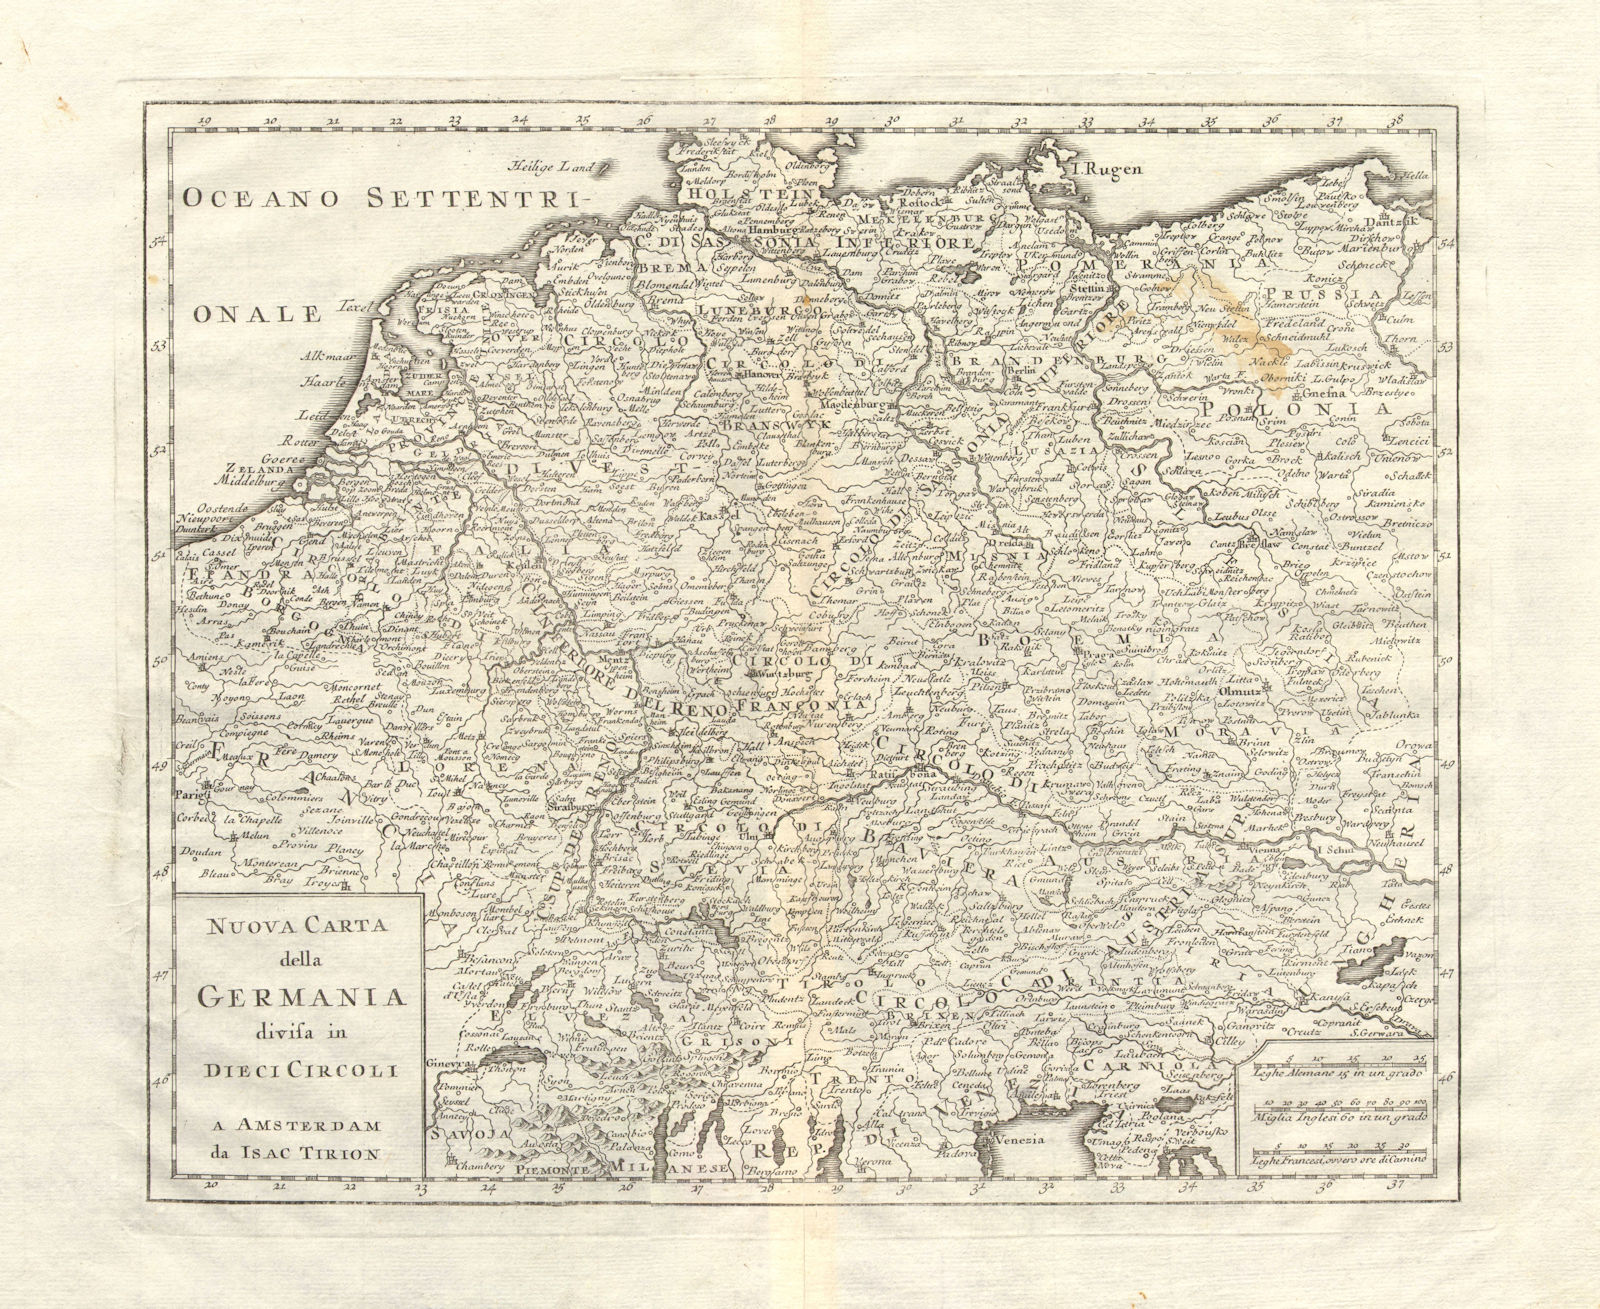 Associate Product 'Nuova Carta della Germania divisa in dieci circoli' by Isaak TIRION 1740 map